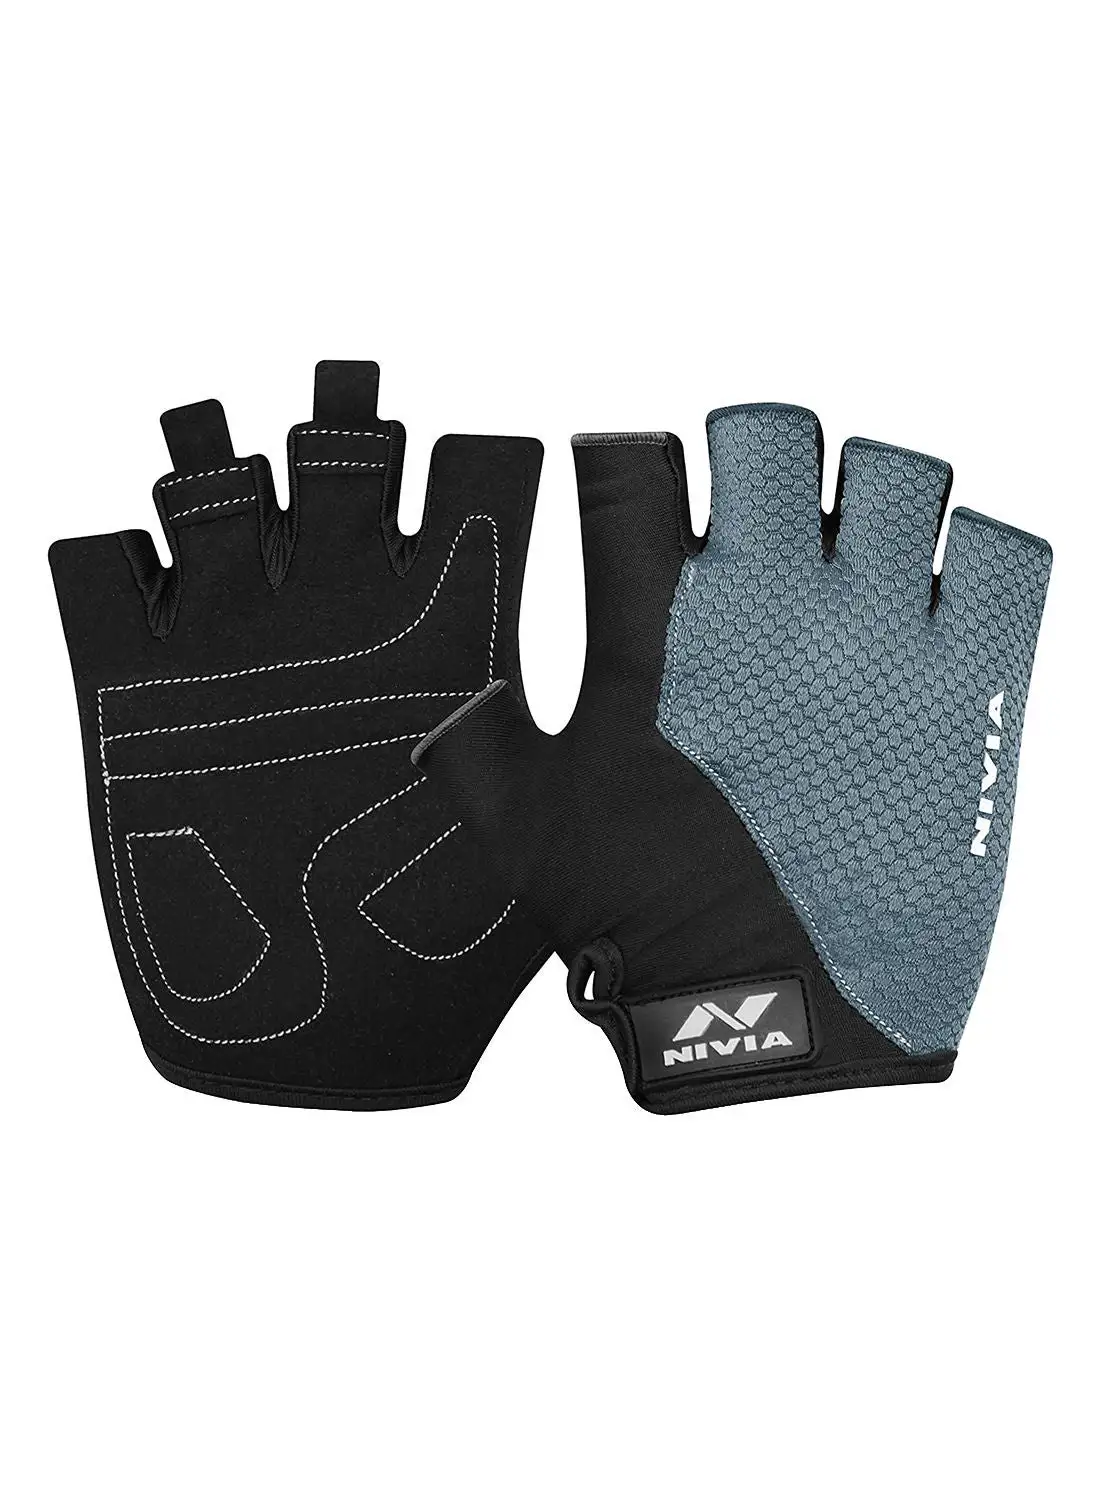 Nivia Coral Micro Sports Glove Medium